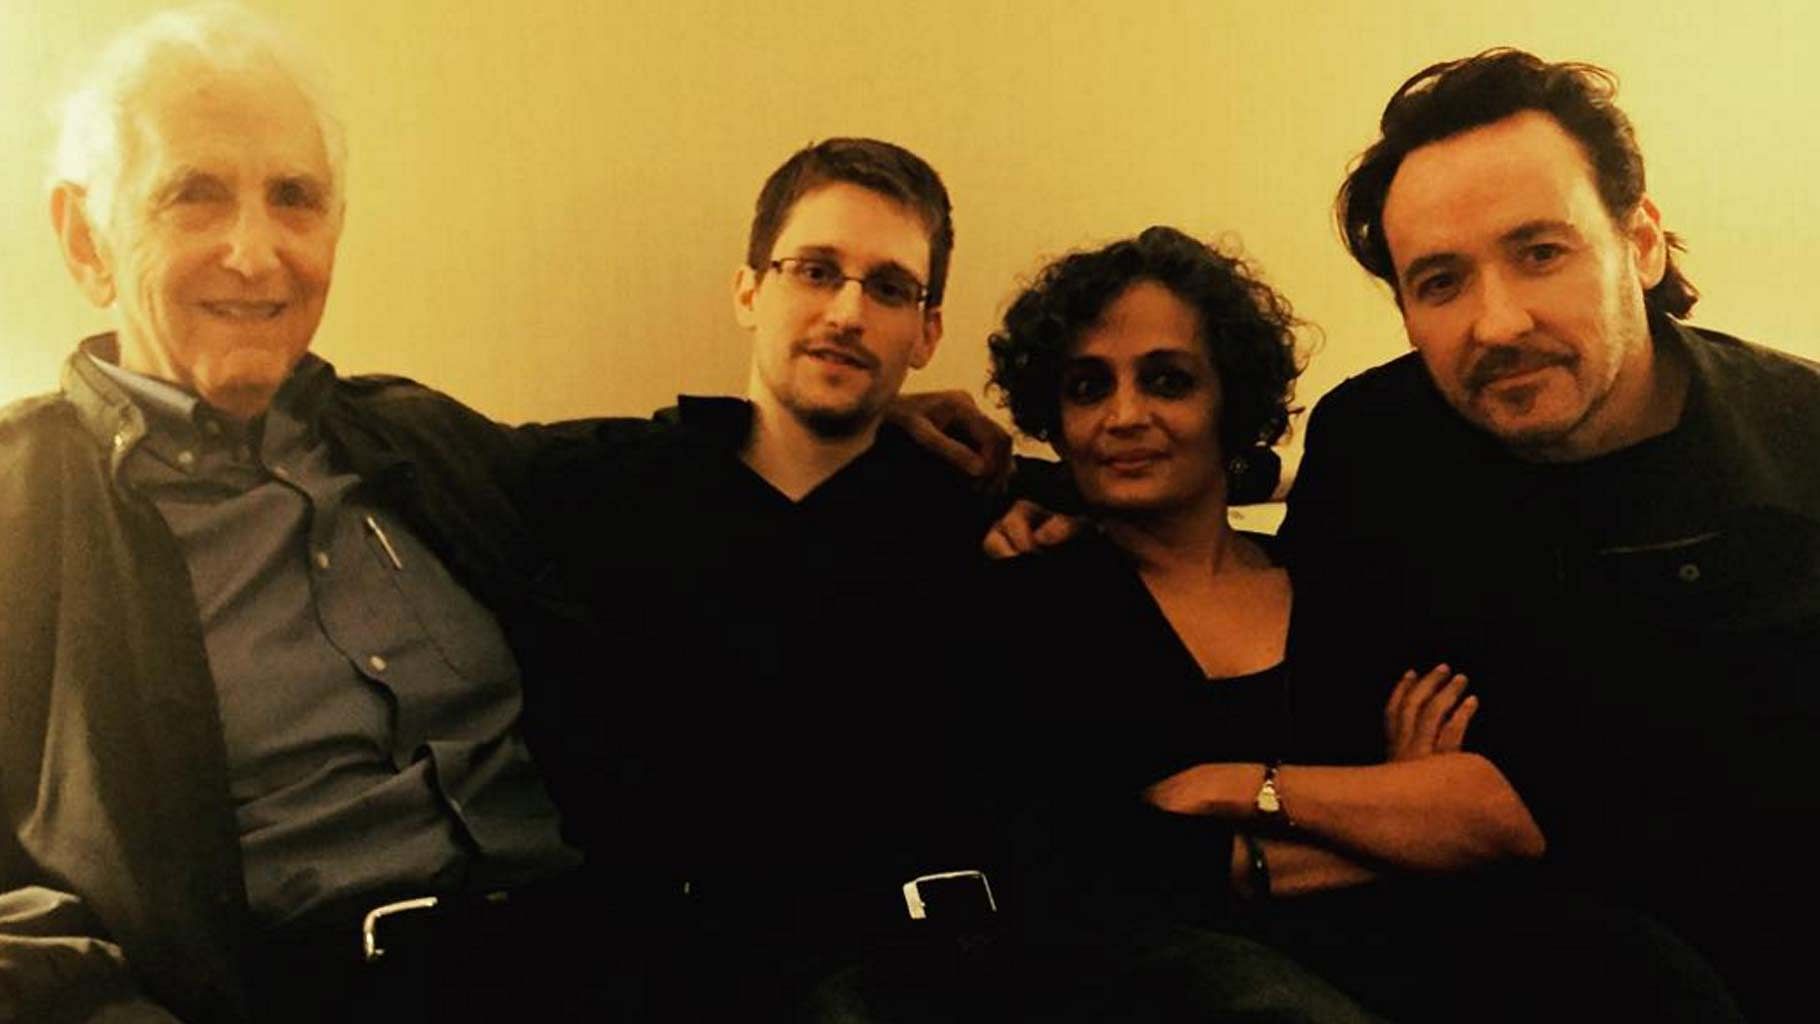 Daniel Ellsberg, Edward Snowden, Arundhati Roy, and John Cusack (L–R). (Photo: <a href="https://www.instagram.com/p/91YLO3gWS7/?taken-by=johncusack">Instagram.com/JohnCusack</a>)